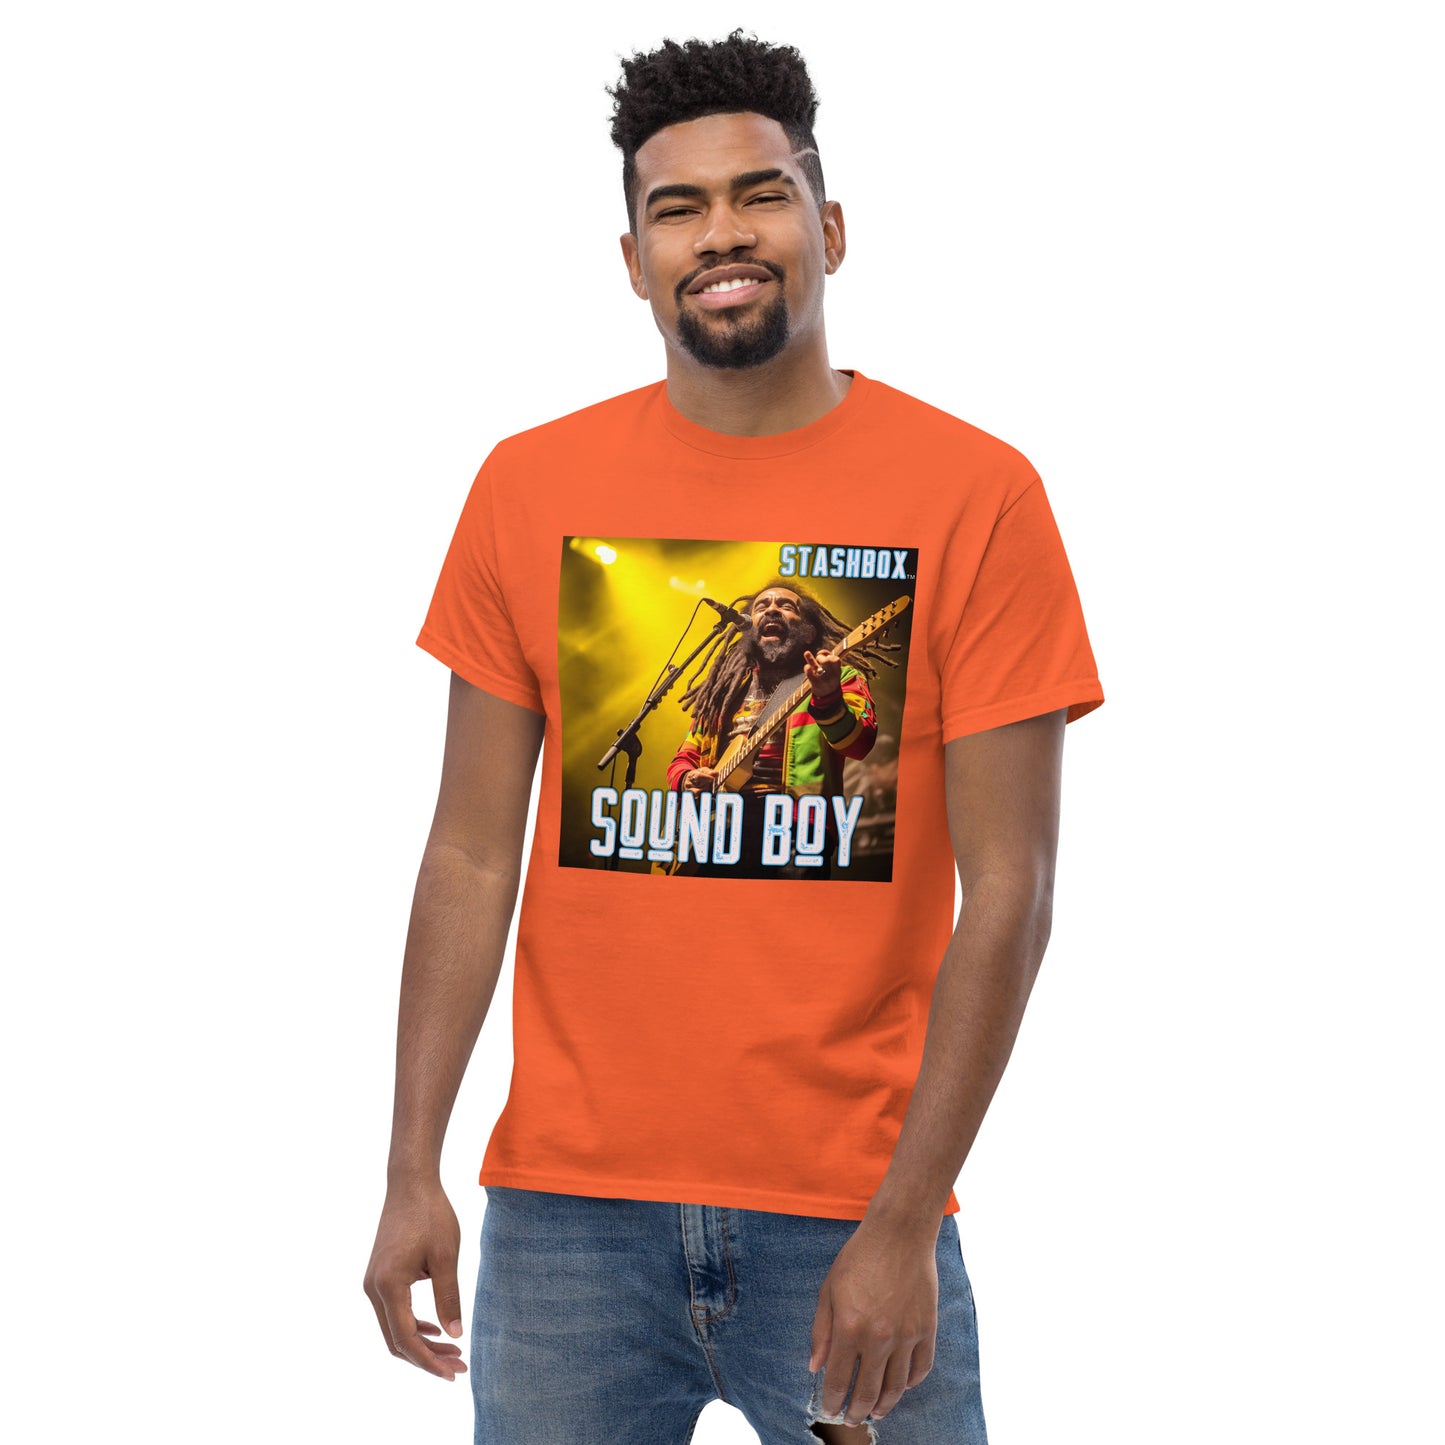 Men's Classic T-Shirt Sound Boy Stashbox 007